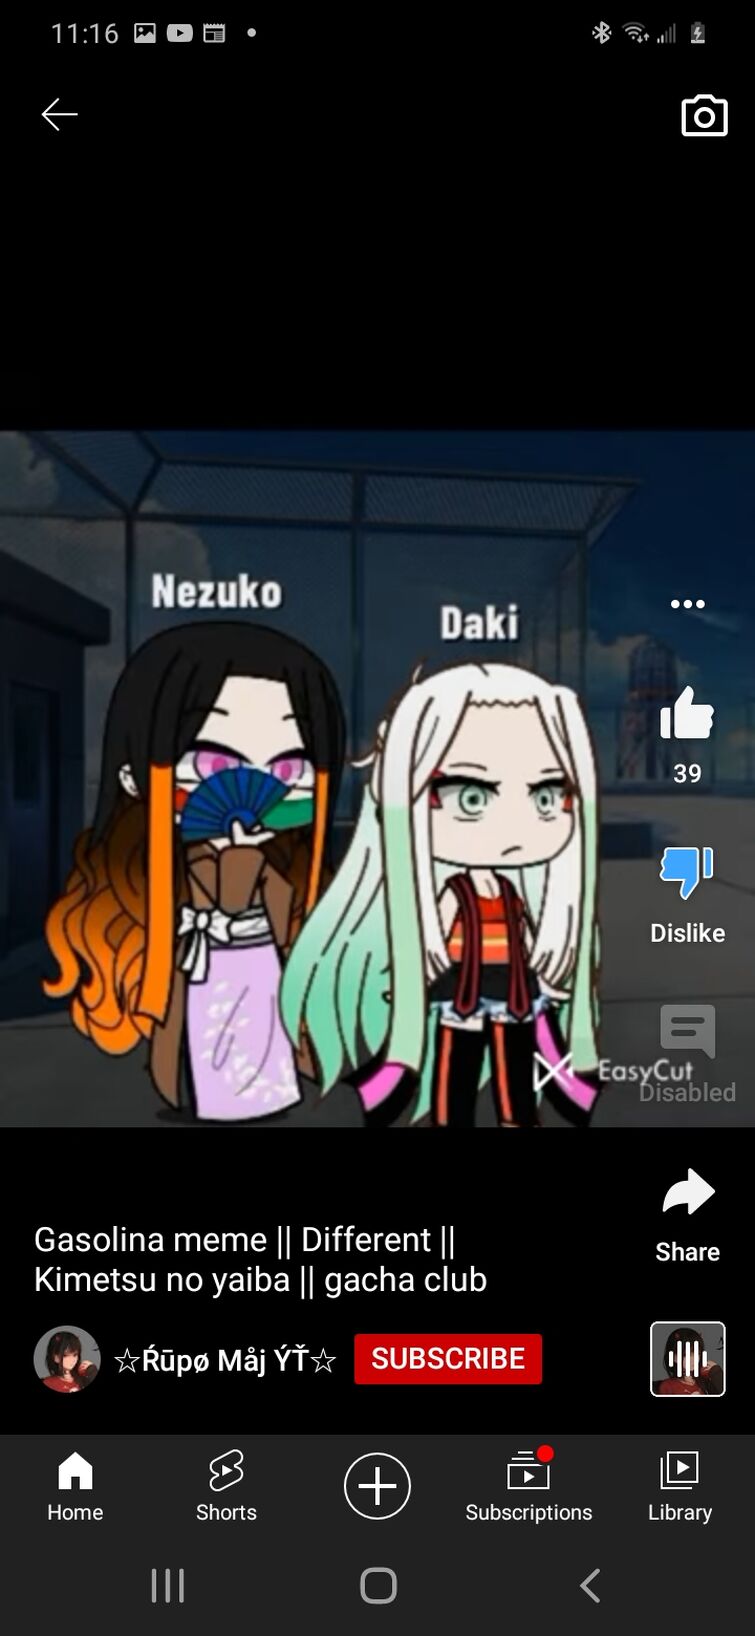 ◇??Who's the real Nezuko??◇ [] Meme [] Gacha club [] Demon Slayer [] 